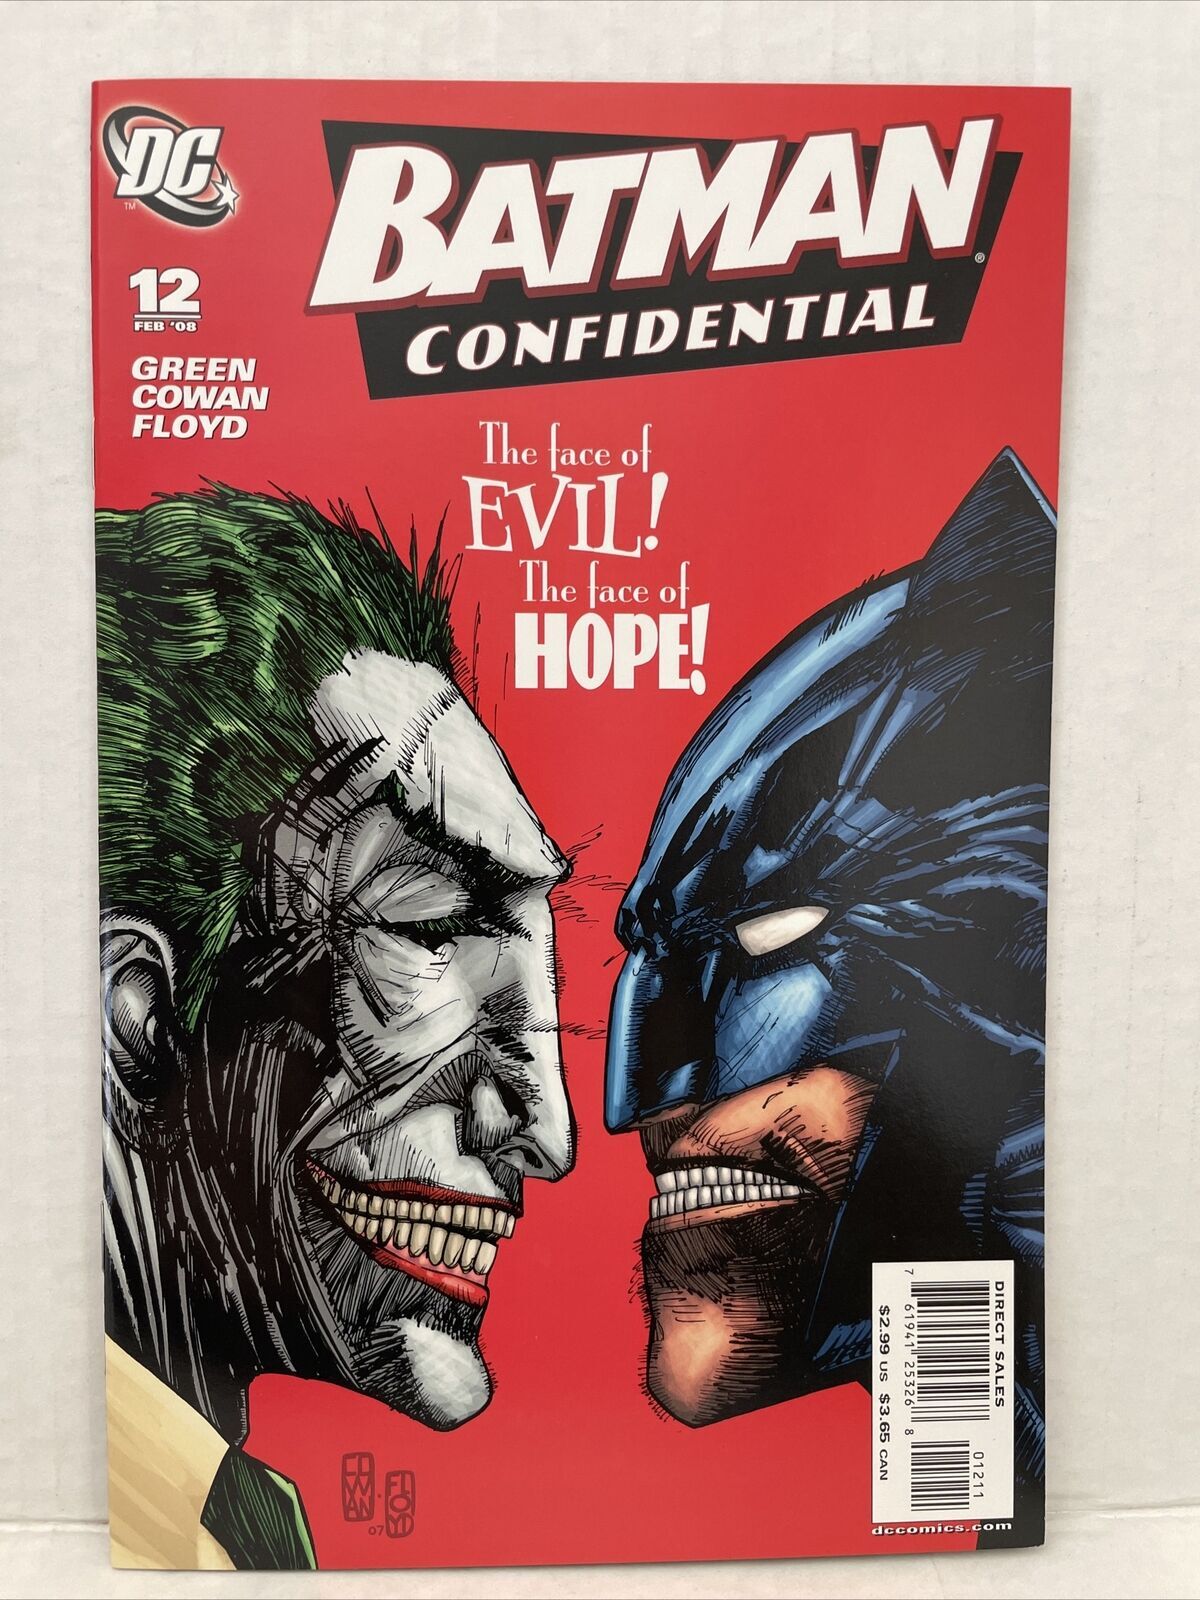 Batman Confidential #12 | Comic Books - Modern Age, DC Comics, Batman,  Superhero / HipComic